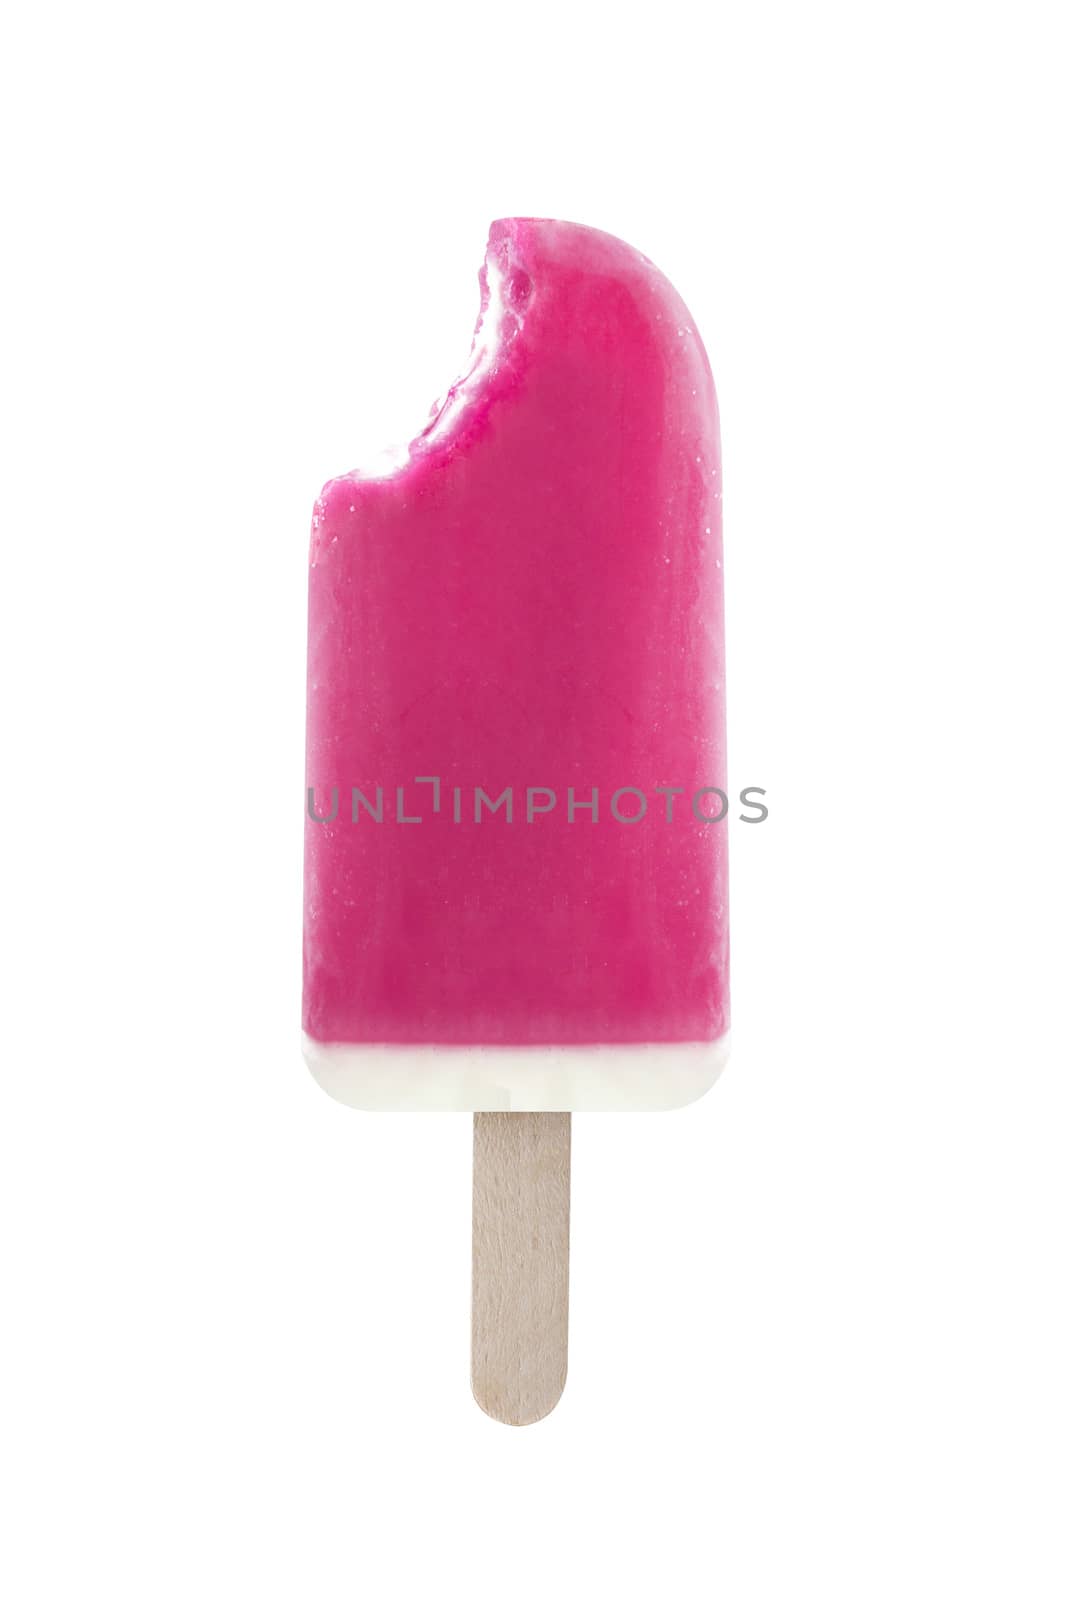 bite ice cream by designsstock